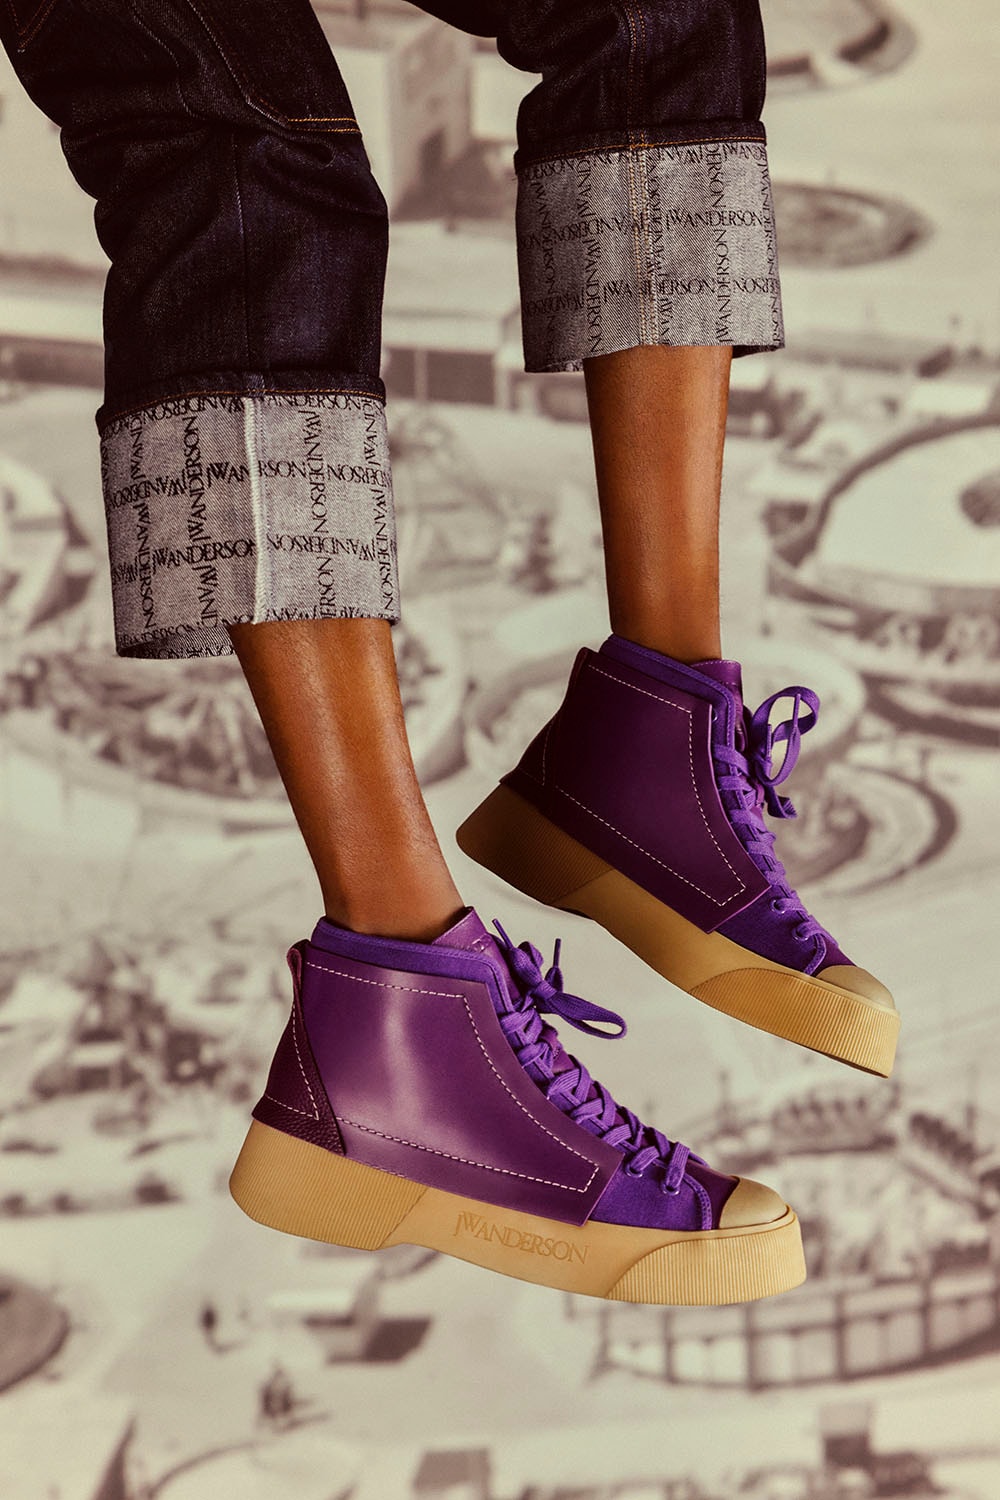 JW Anderson Debuts First-Ever Sneaker Release 7 Colors Orange Purple Green Brown White Black Gum